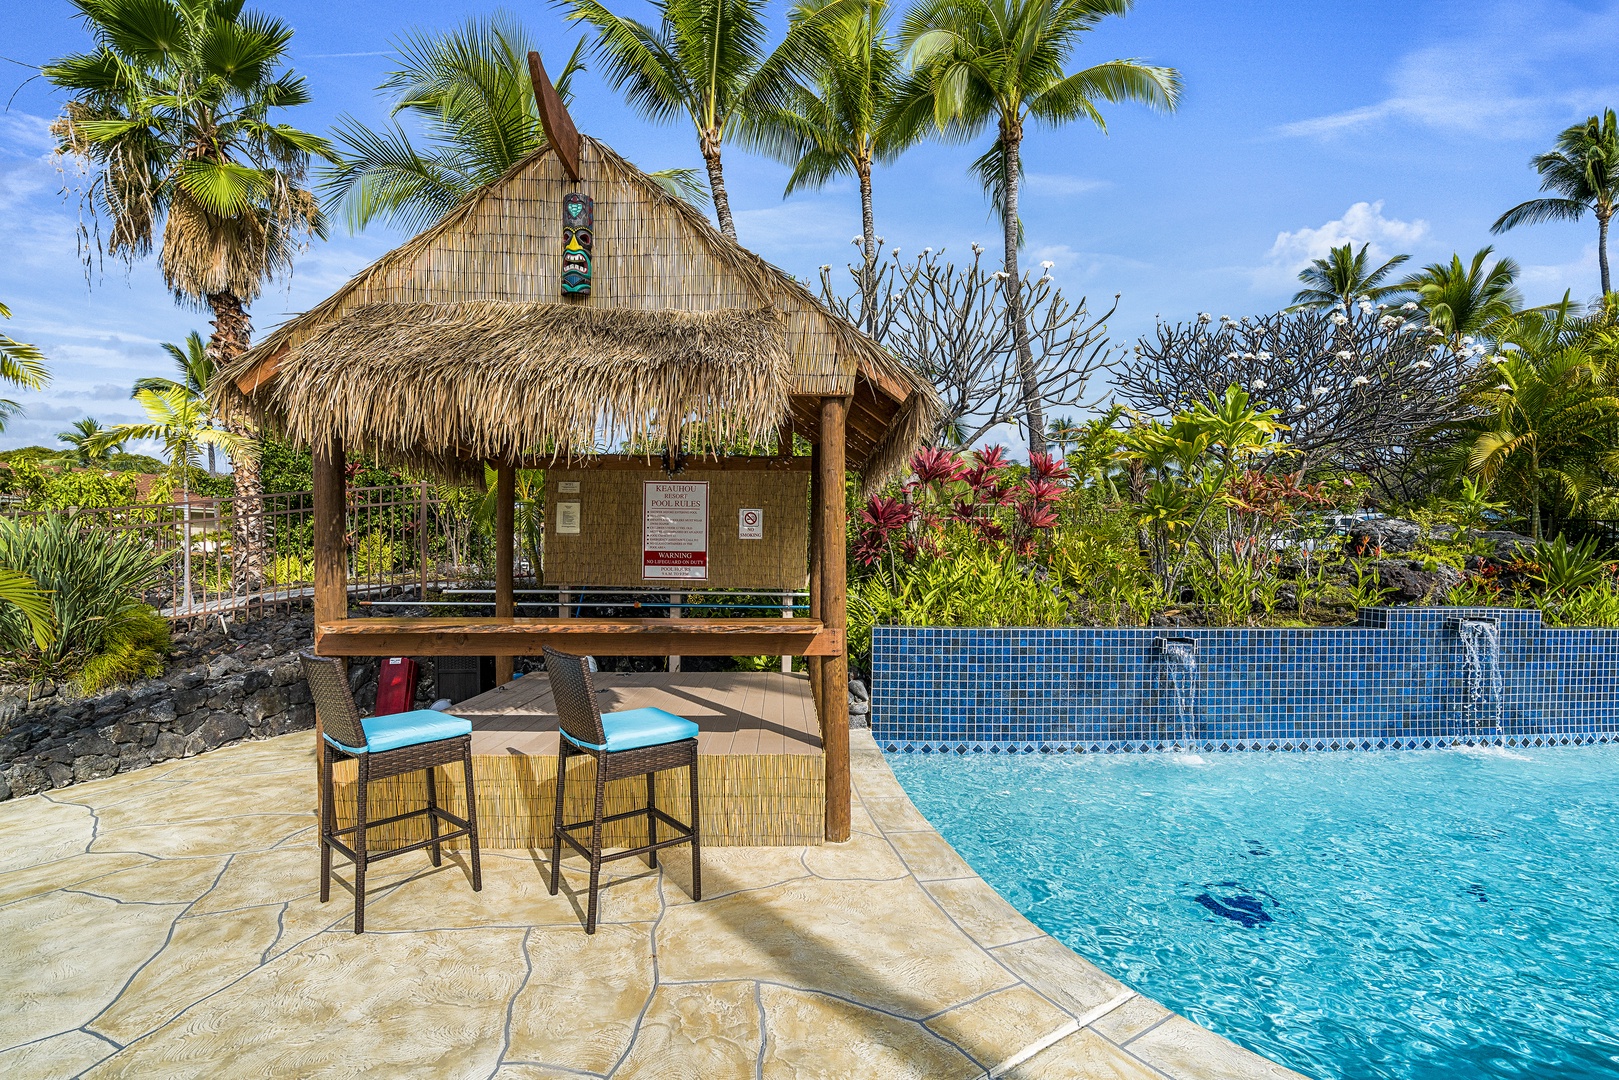 Kailua-Kona Vacation Rentals, Keauhou Resort 116 - Pool side pergola